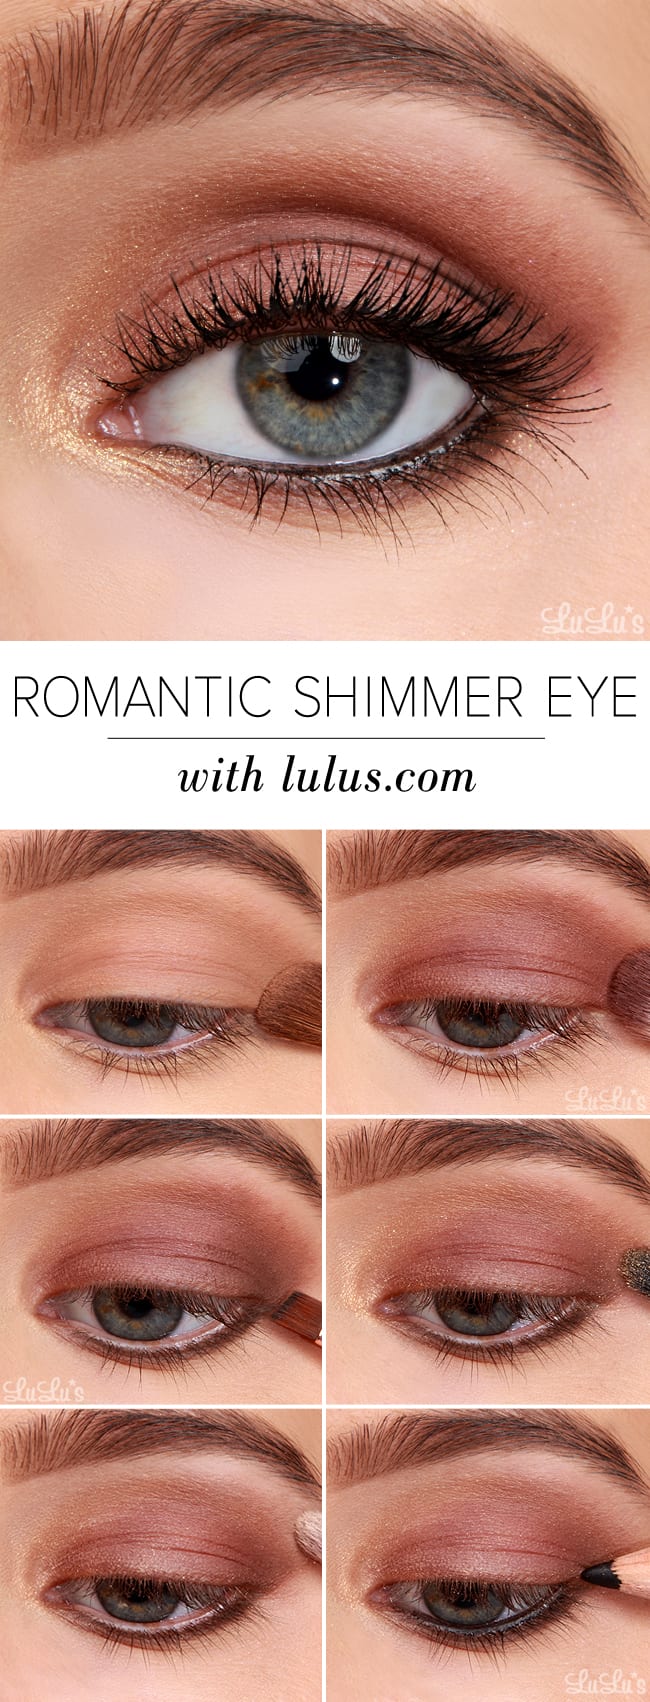 Lulus How-To: Romantic Shimmer Eyeshadow Tutorial - Lulus.com Fashion Blog